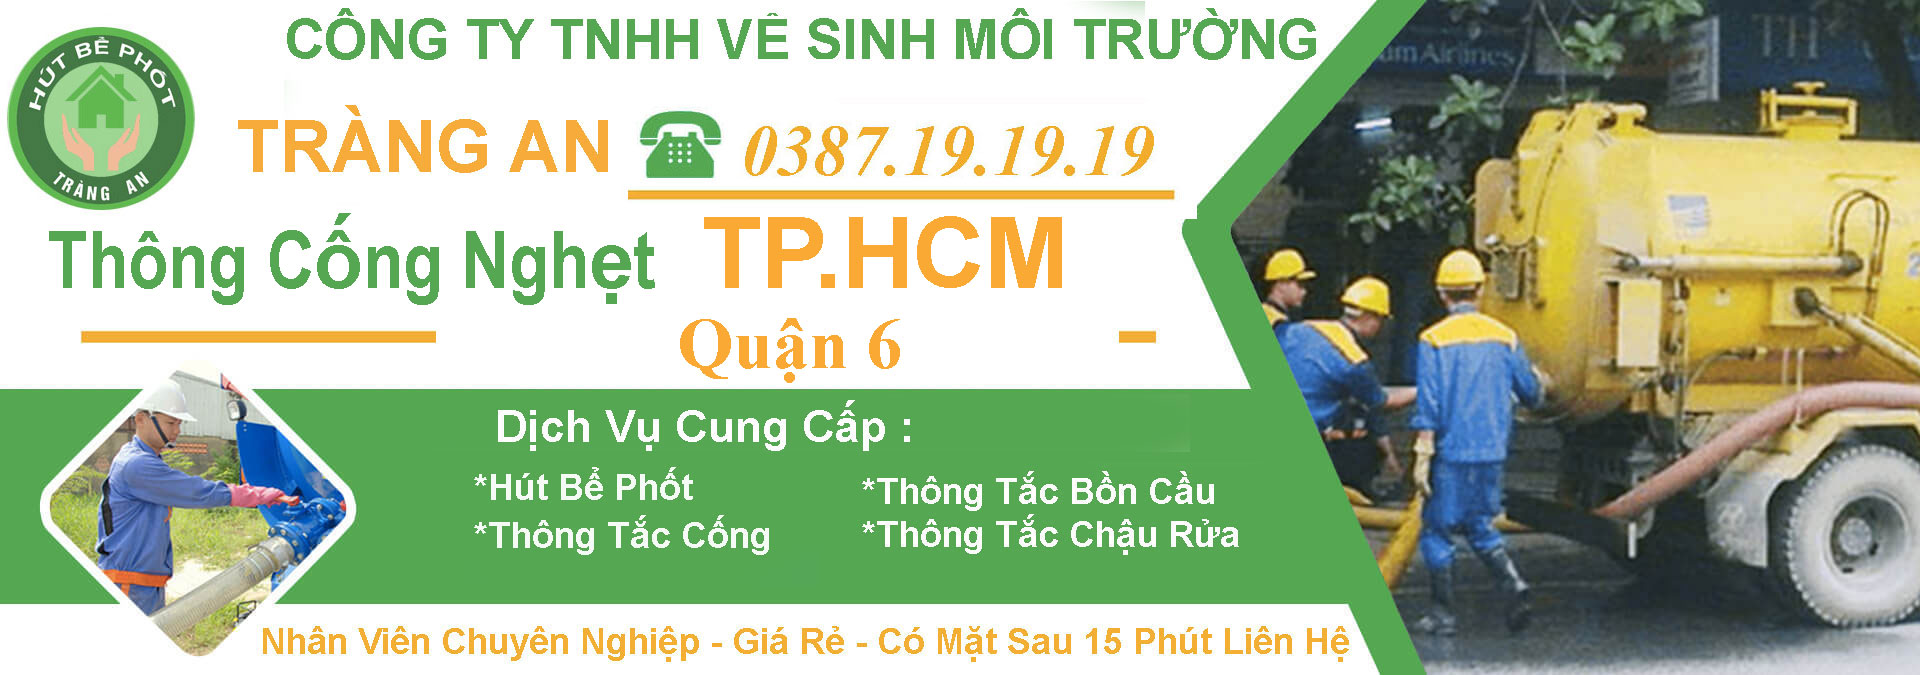 Thong Cong Nghet Tphcm Quan 6